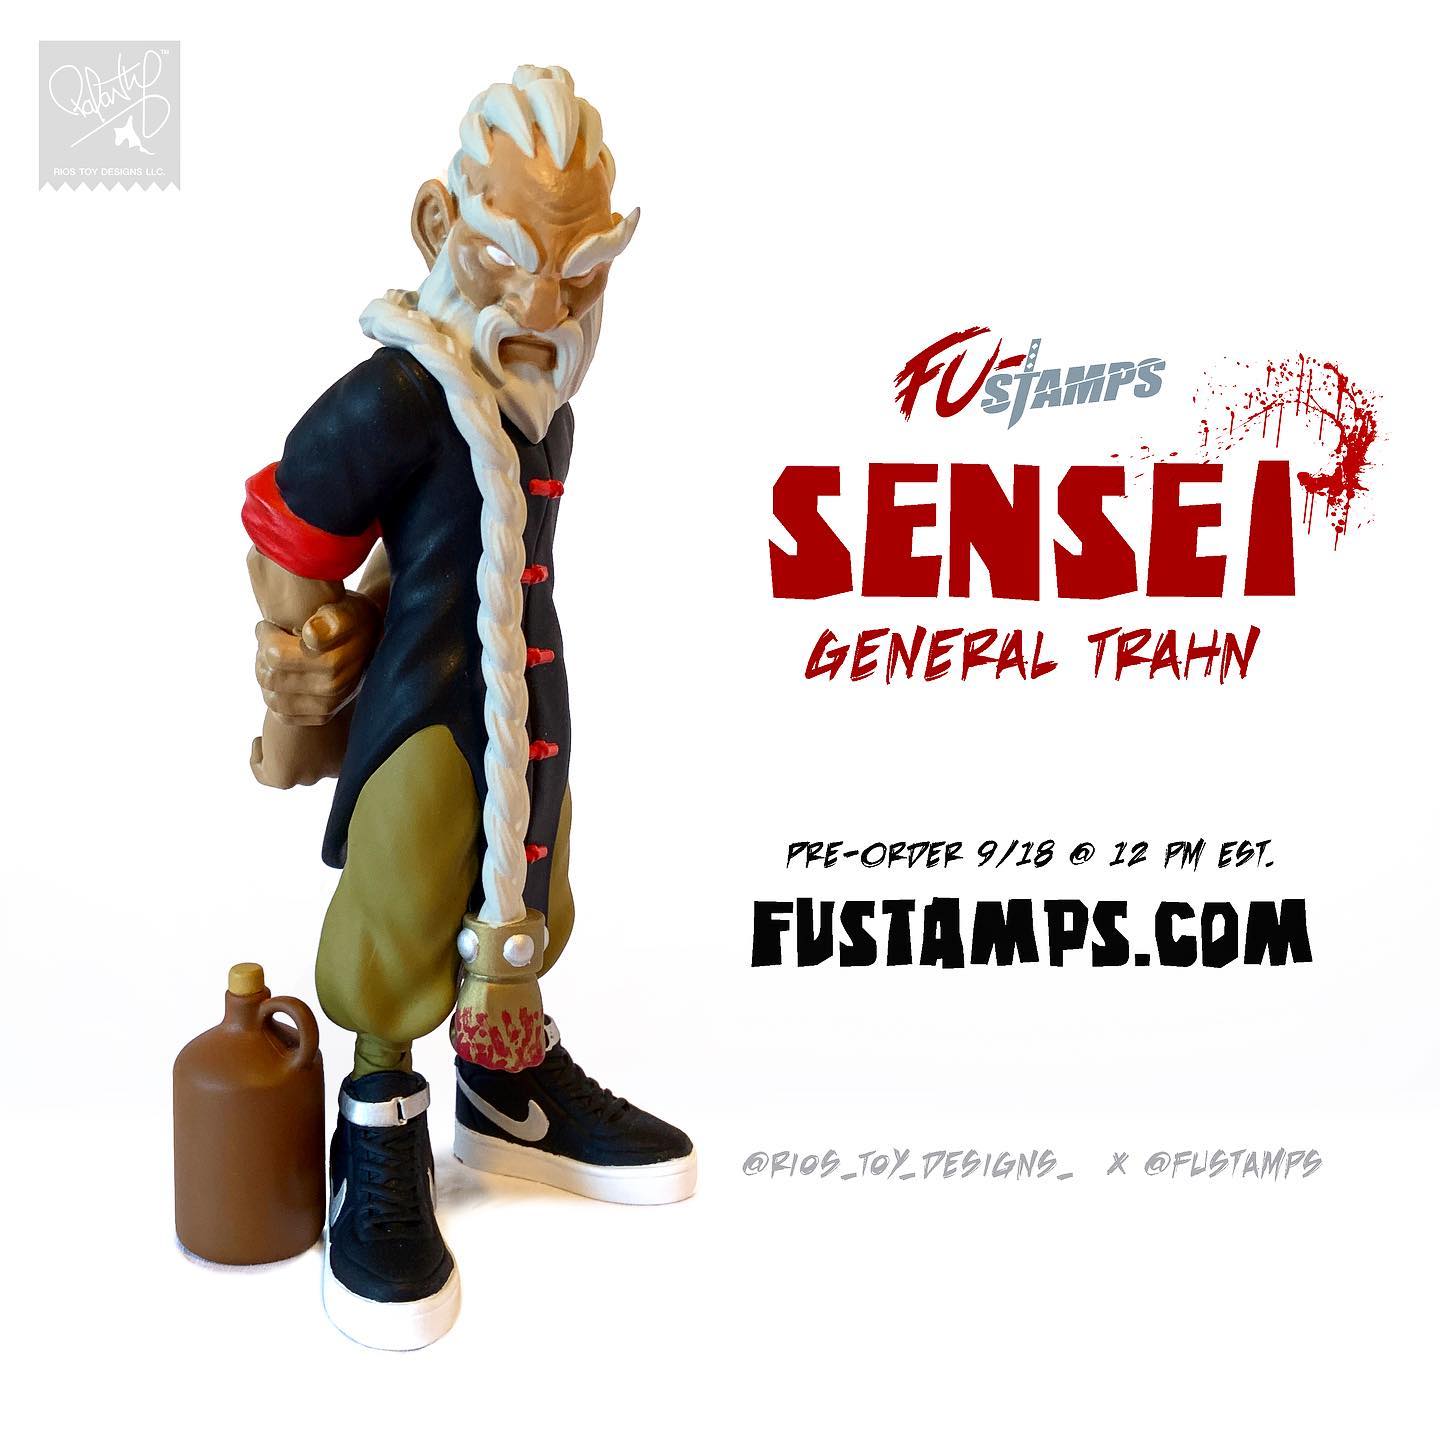 Fu Crew S Sensei General Trahn By Rios Toy Designs X Fu Stamps Sept 18 Preorder